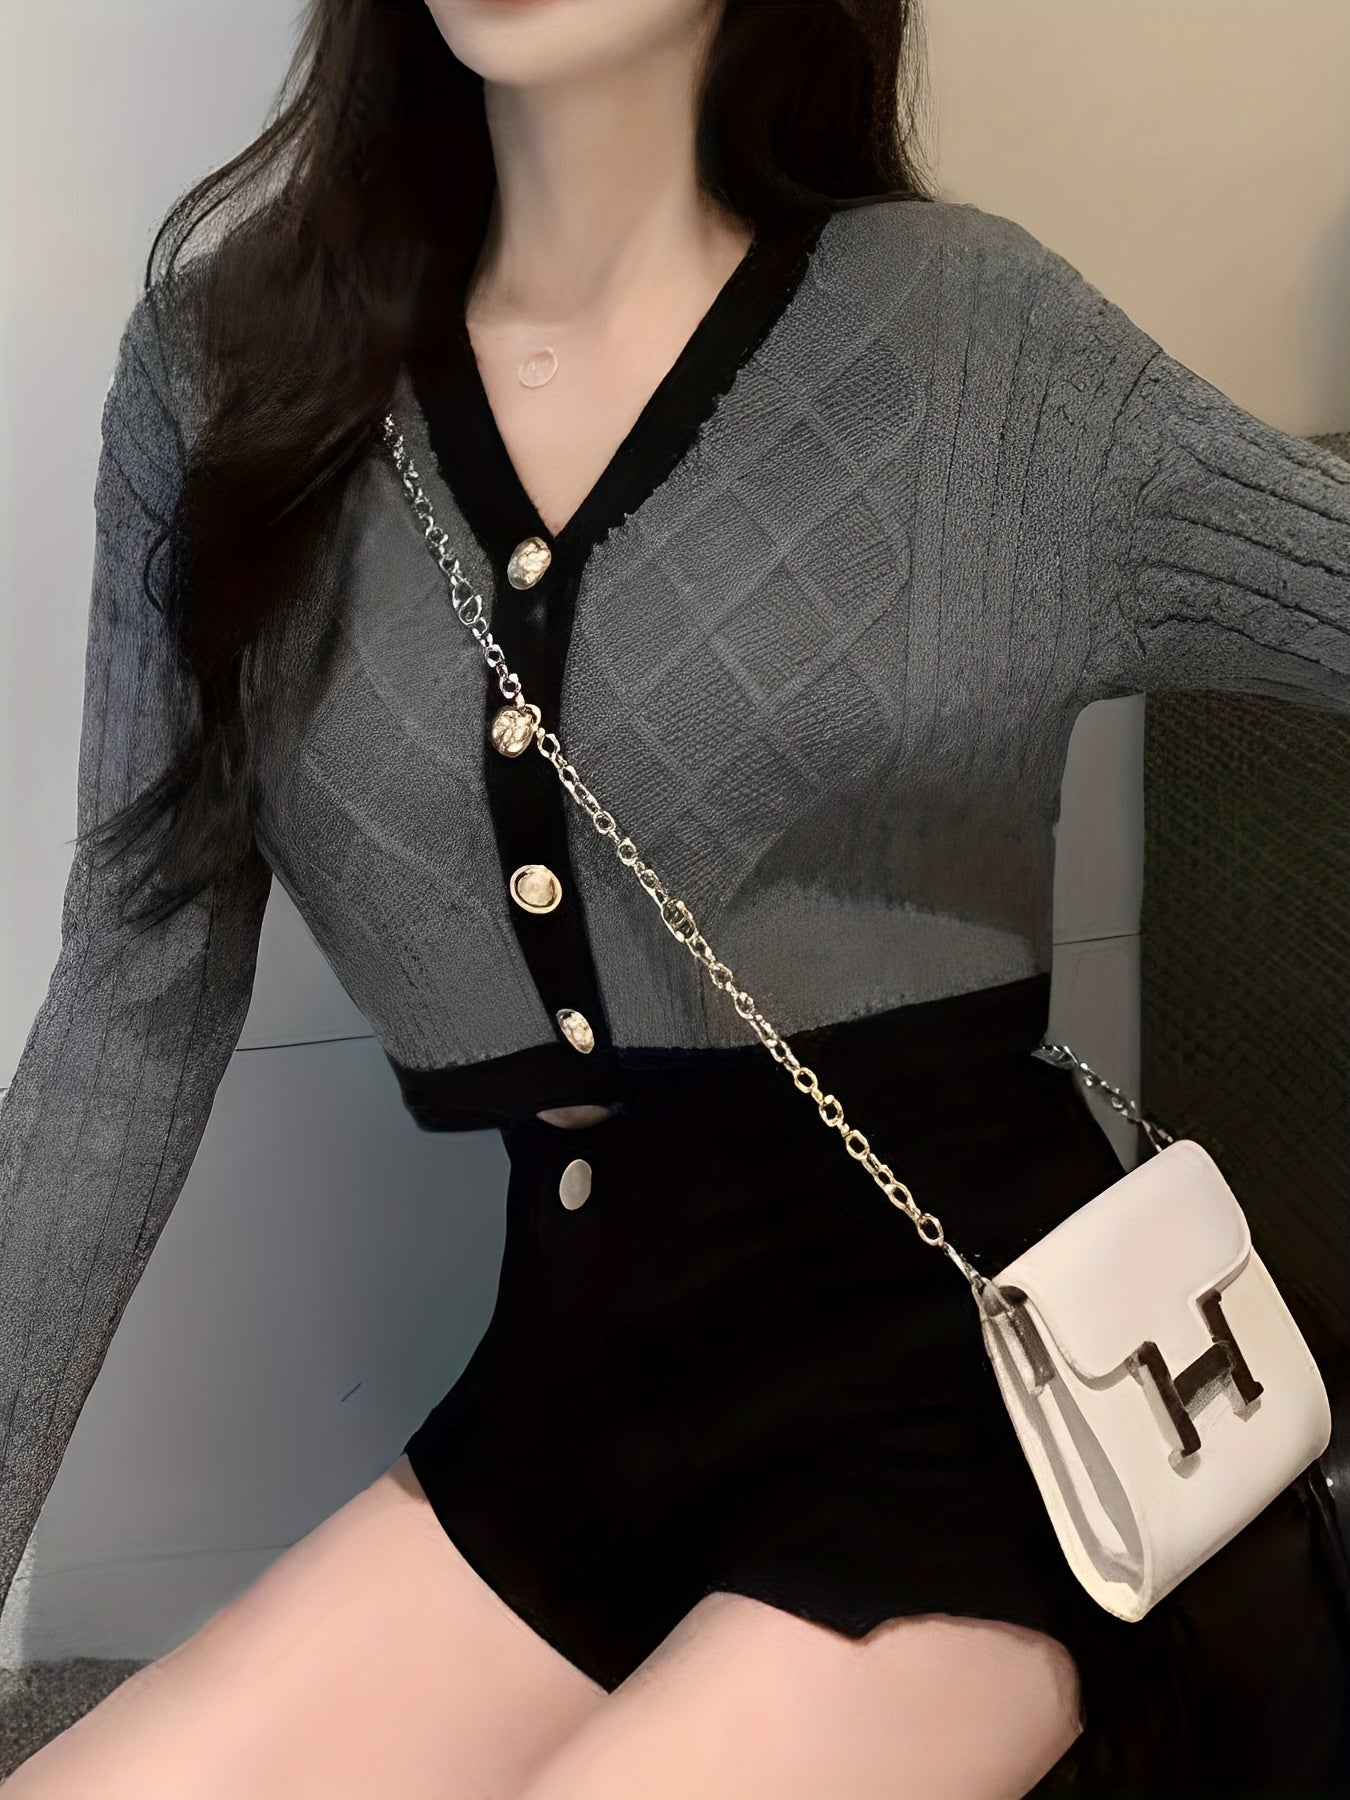 Antmvs Elegant Contrast Trim Button Cardigan, Long Sleeve Cardigan For Spring & Fall, Women's Clothing